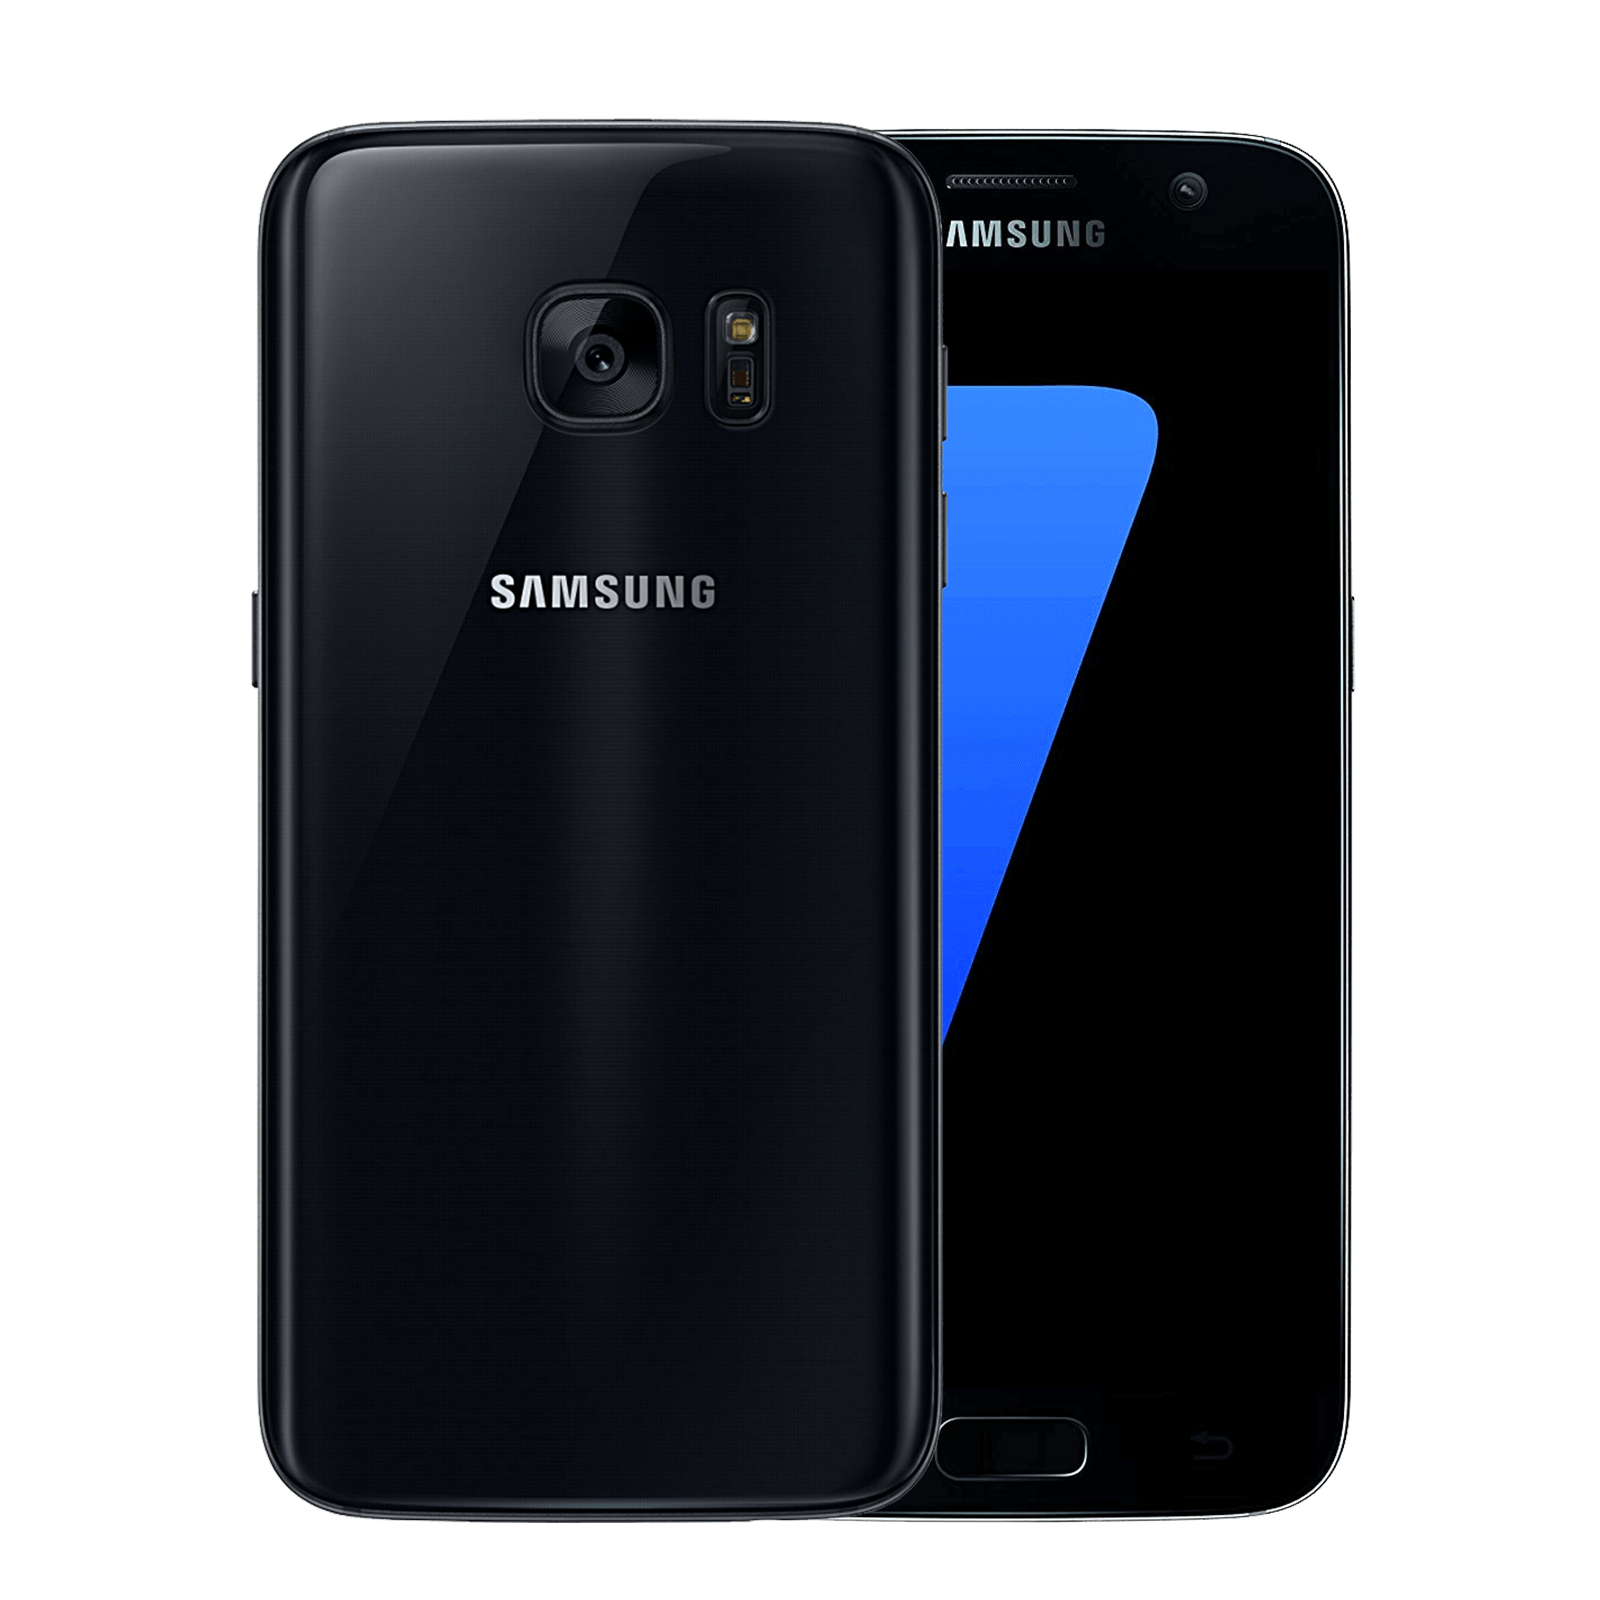 Samsung Galaxy S7 32GB Black G930F Fair - Unlocked 32GB Black Fair